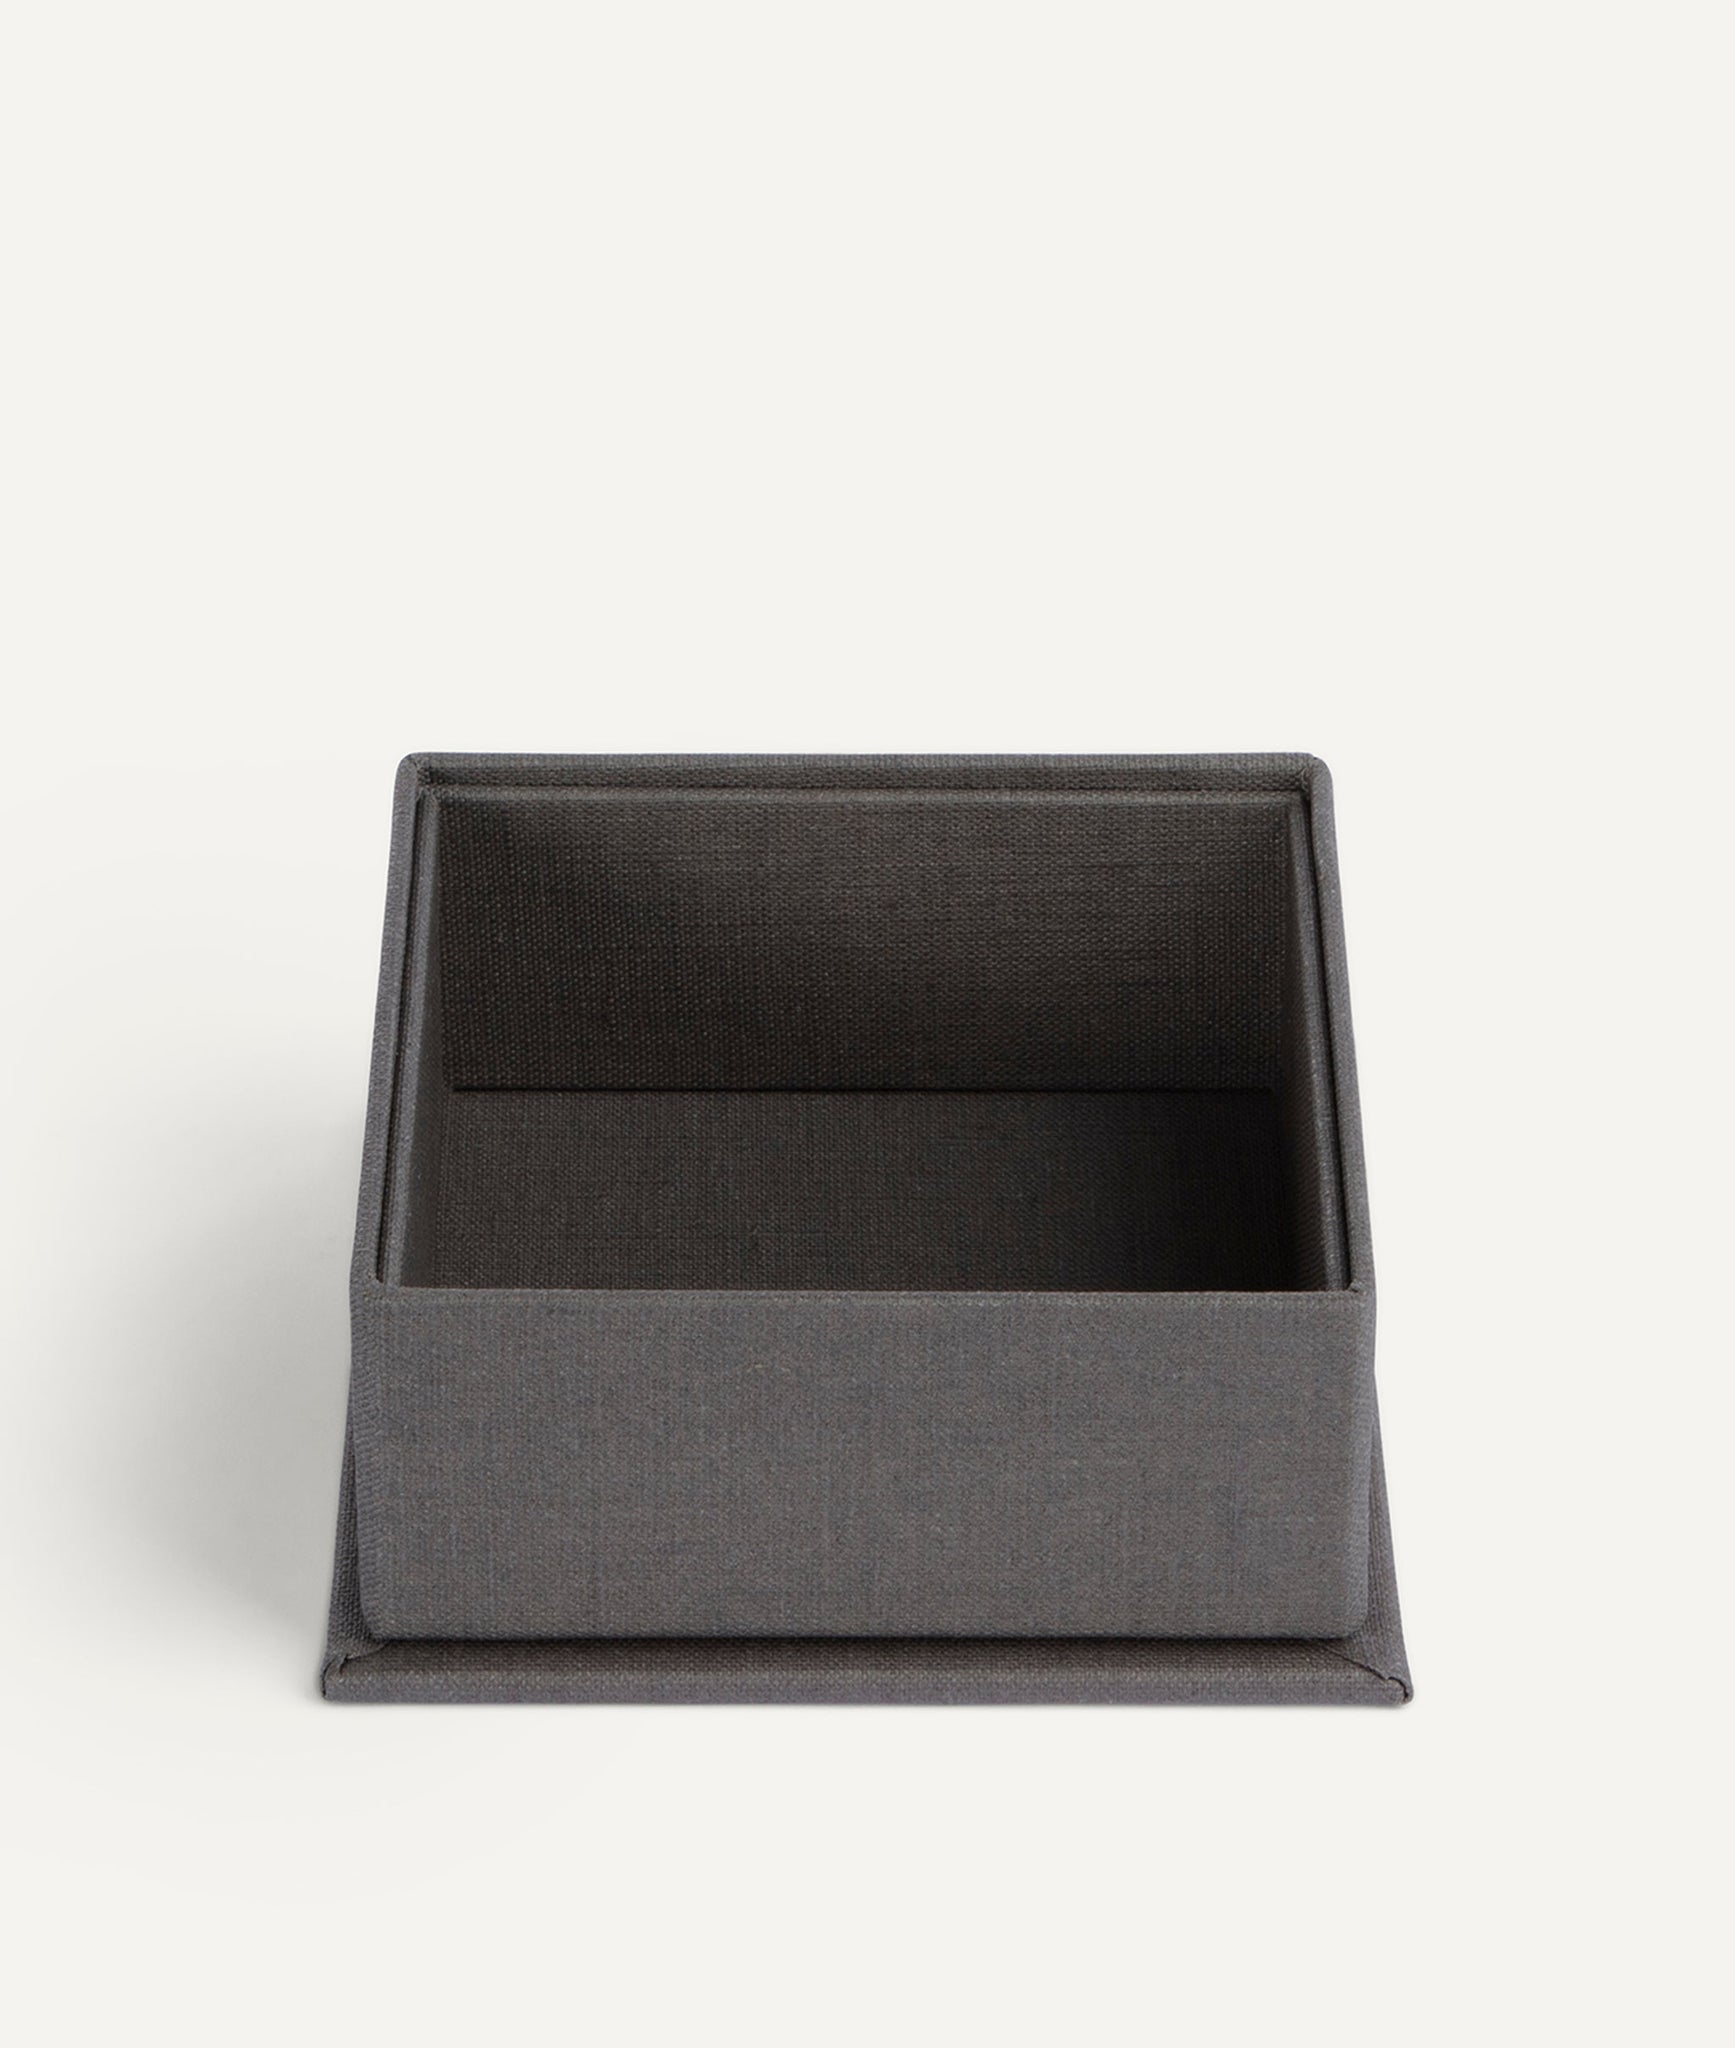 Squared Box in Linen